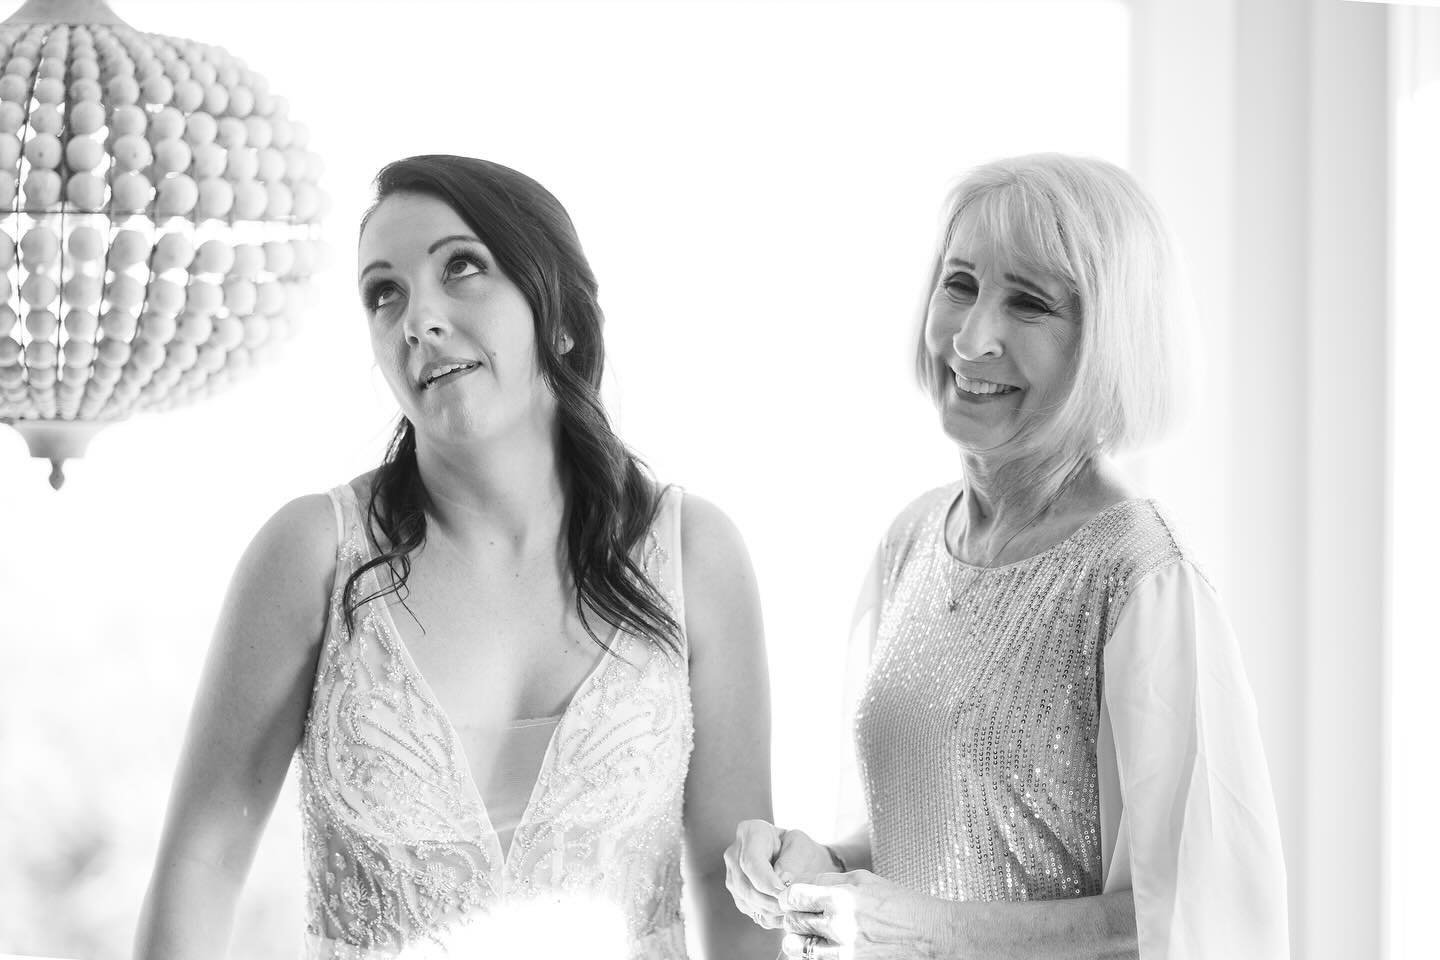 Capturing those candid moments between mother and daughter on the big day! 😂💕 #daresayweddings #weddingphotography #familylove #weddingantics #MotheroftheBride